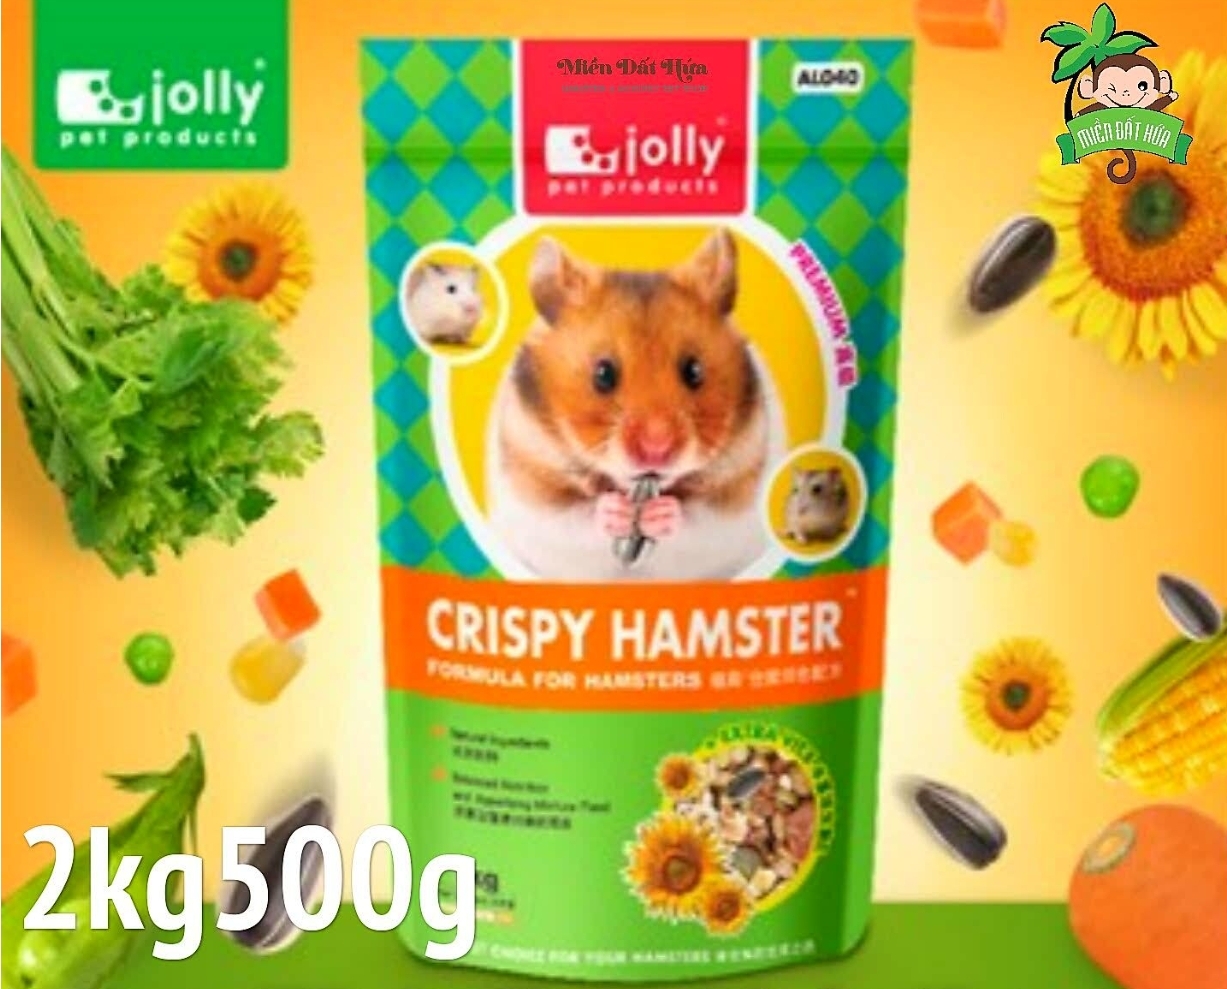 Thức ăn crispy cho hamster 2kg500g jolly